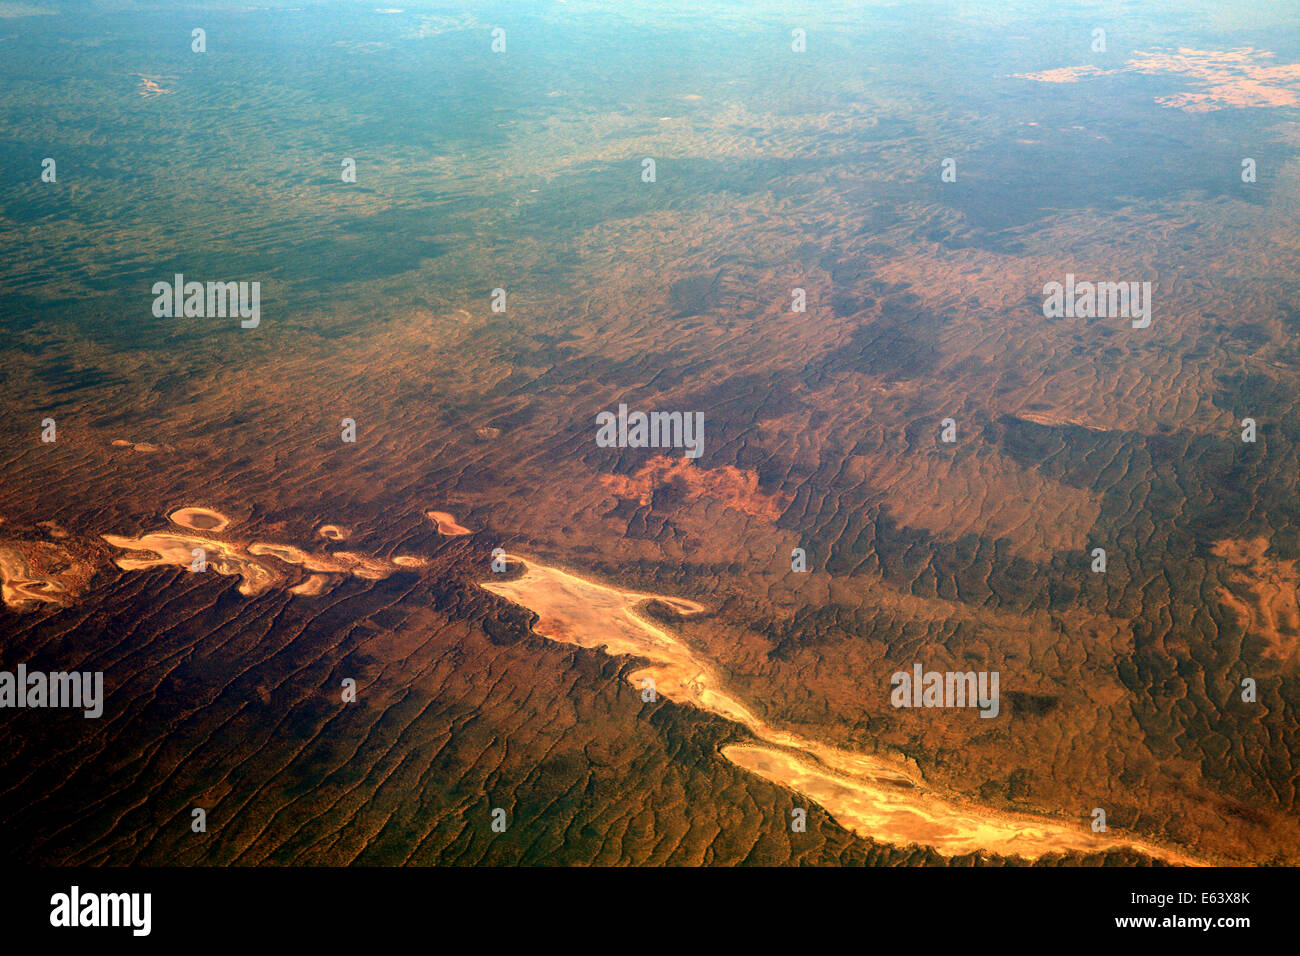 Land contours in Outback Australia Stock Photo